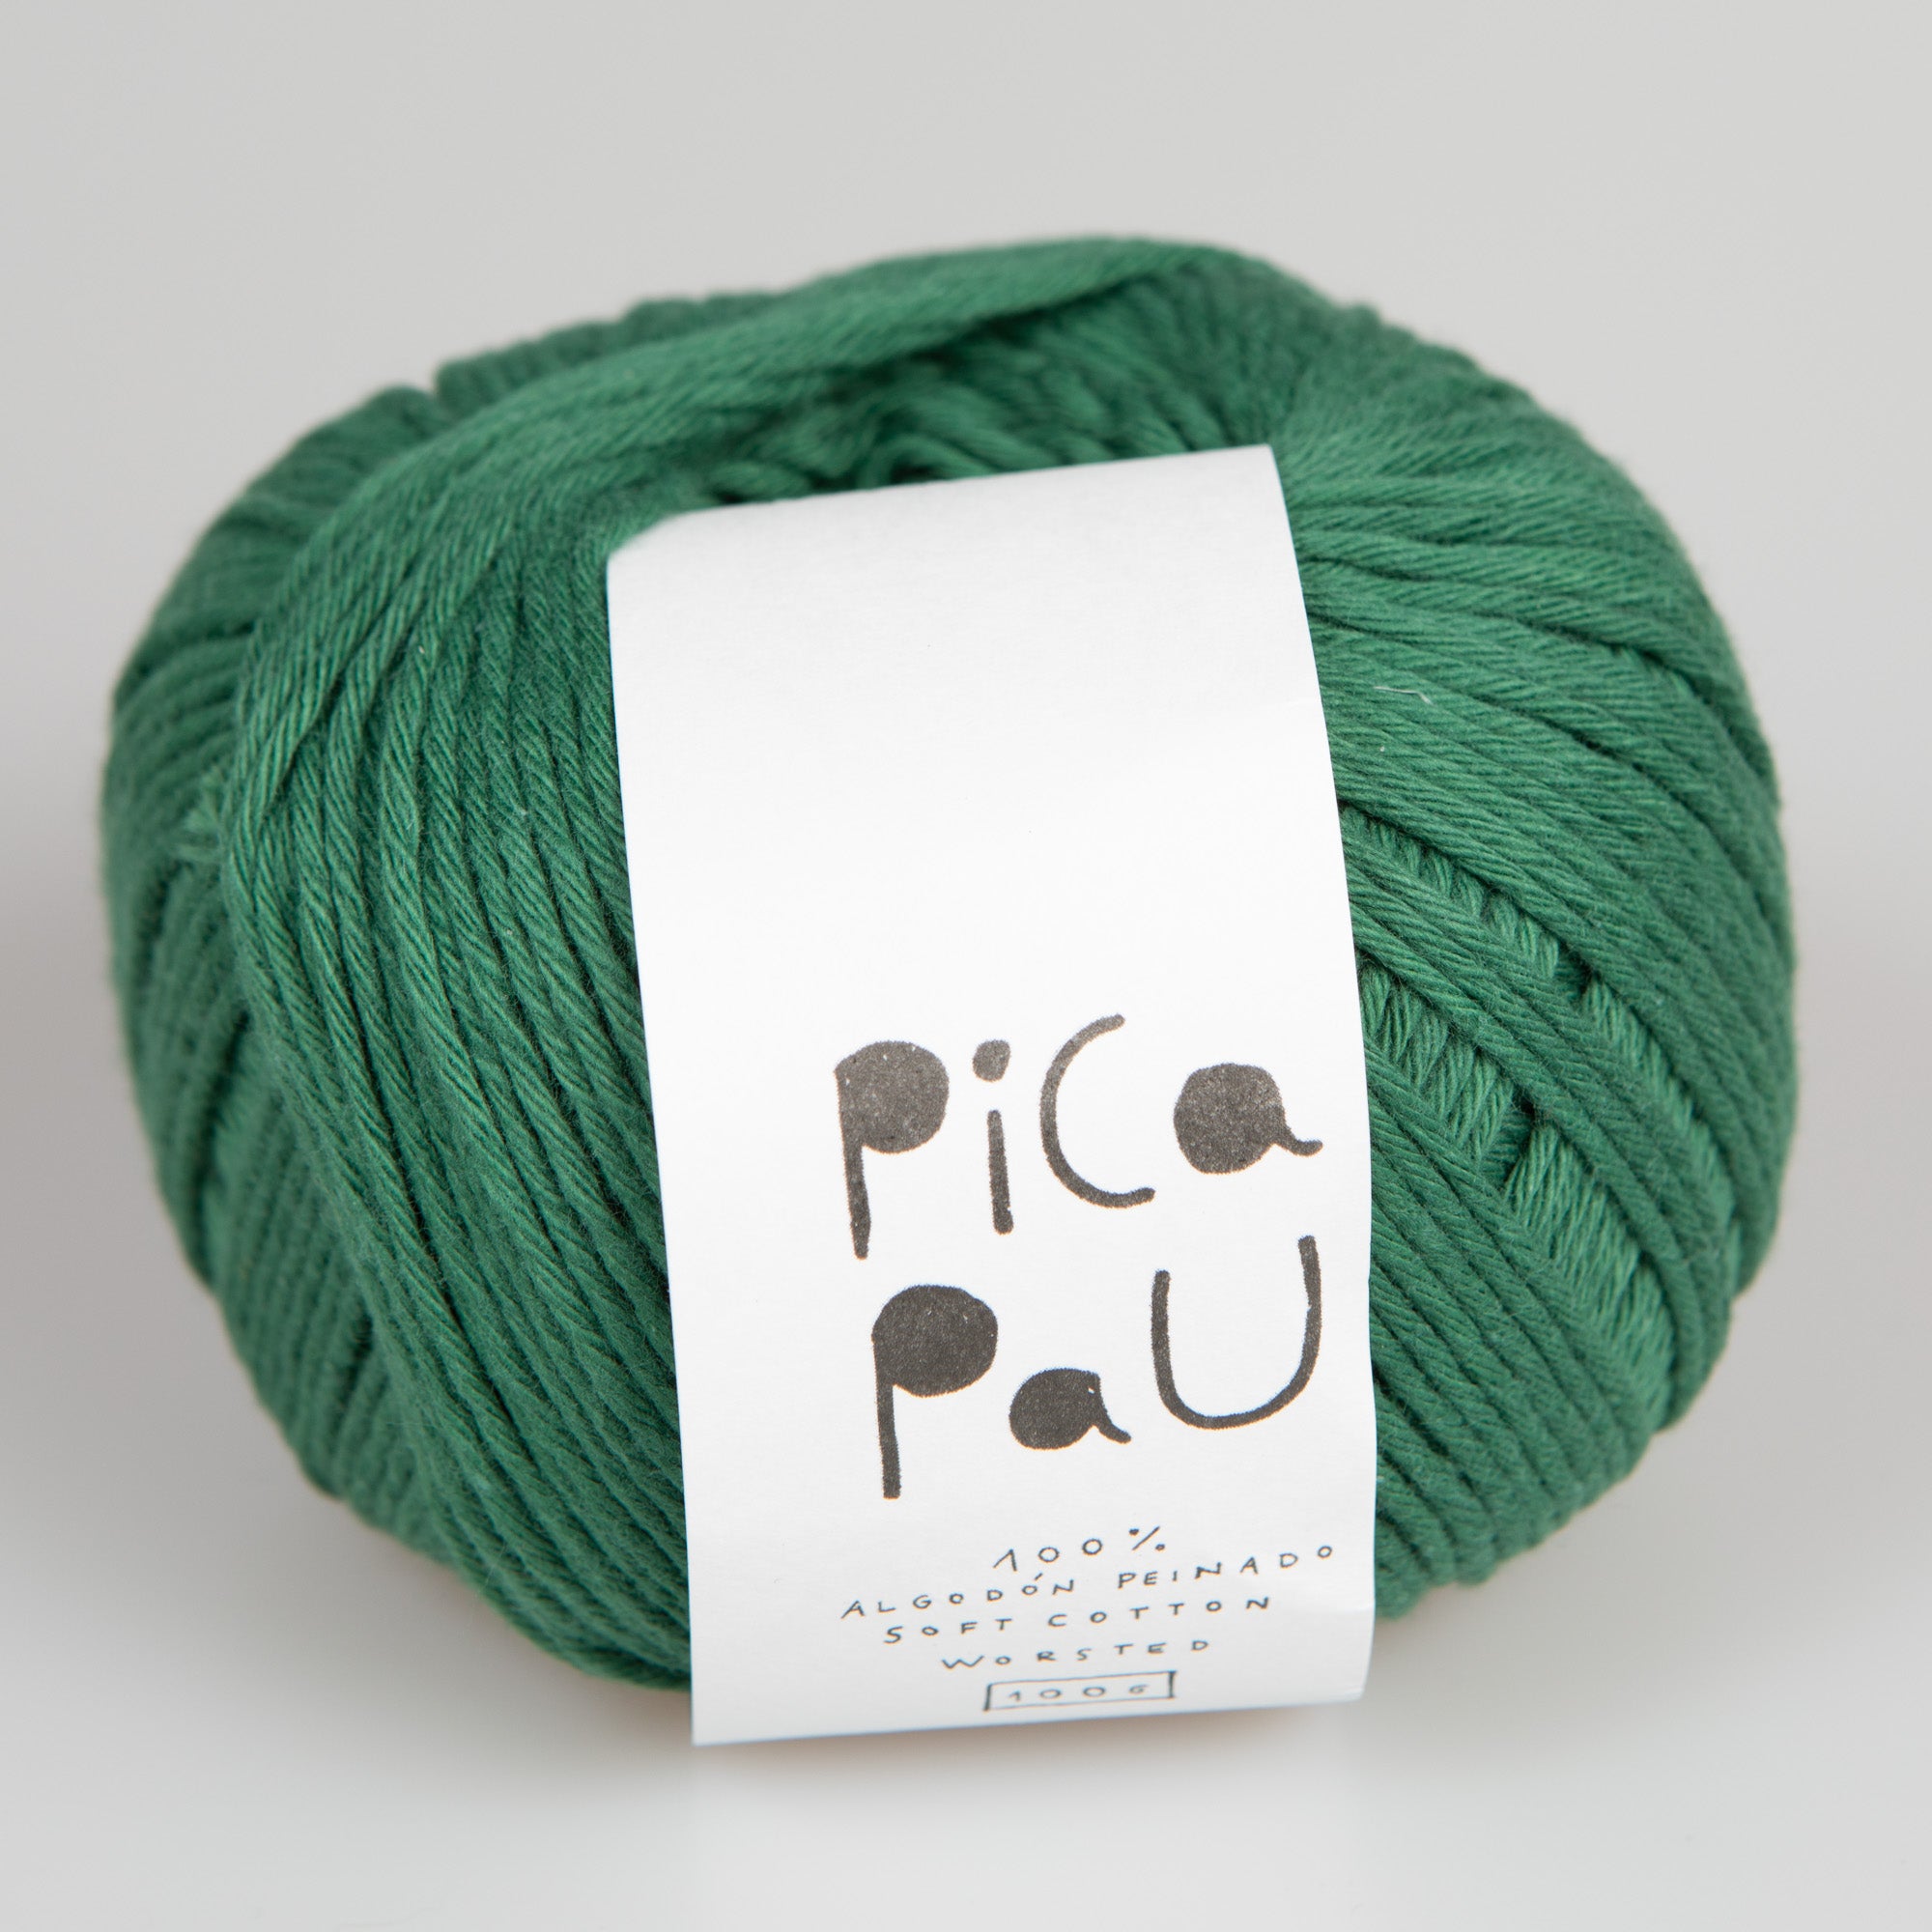 Pica Pau Cotton Yarn / 100g Worsted - Ayarna